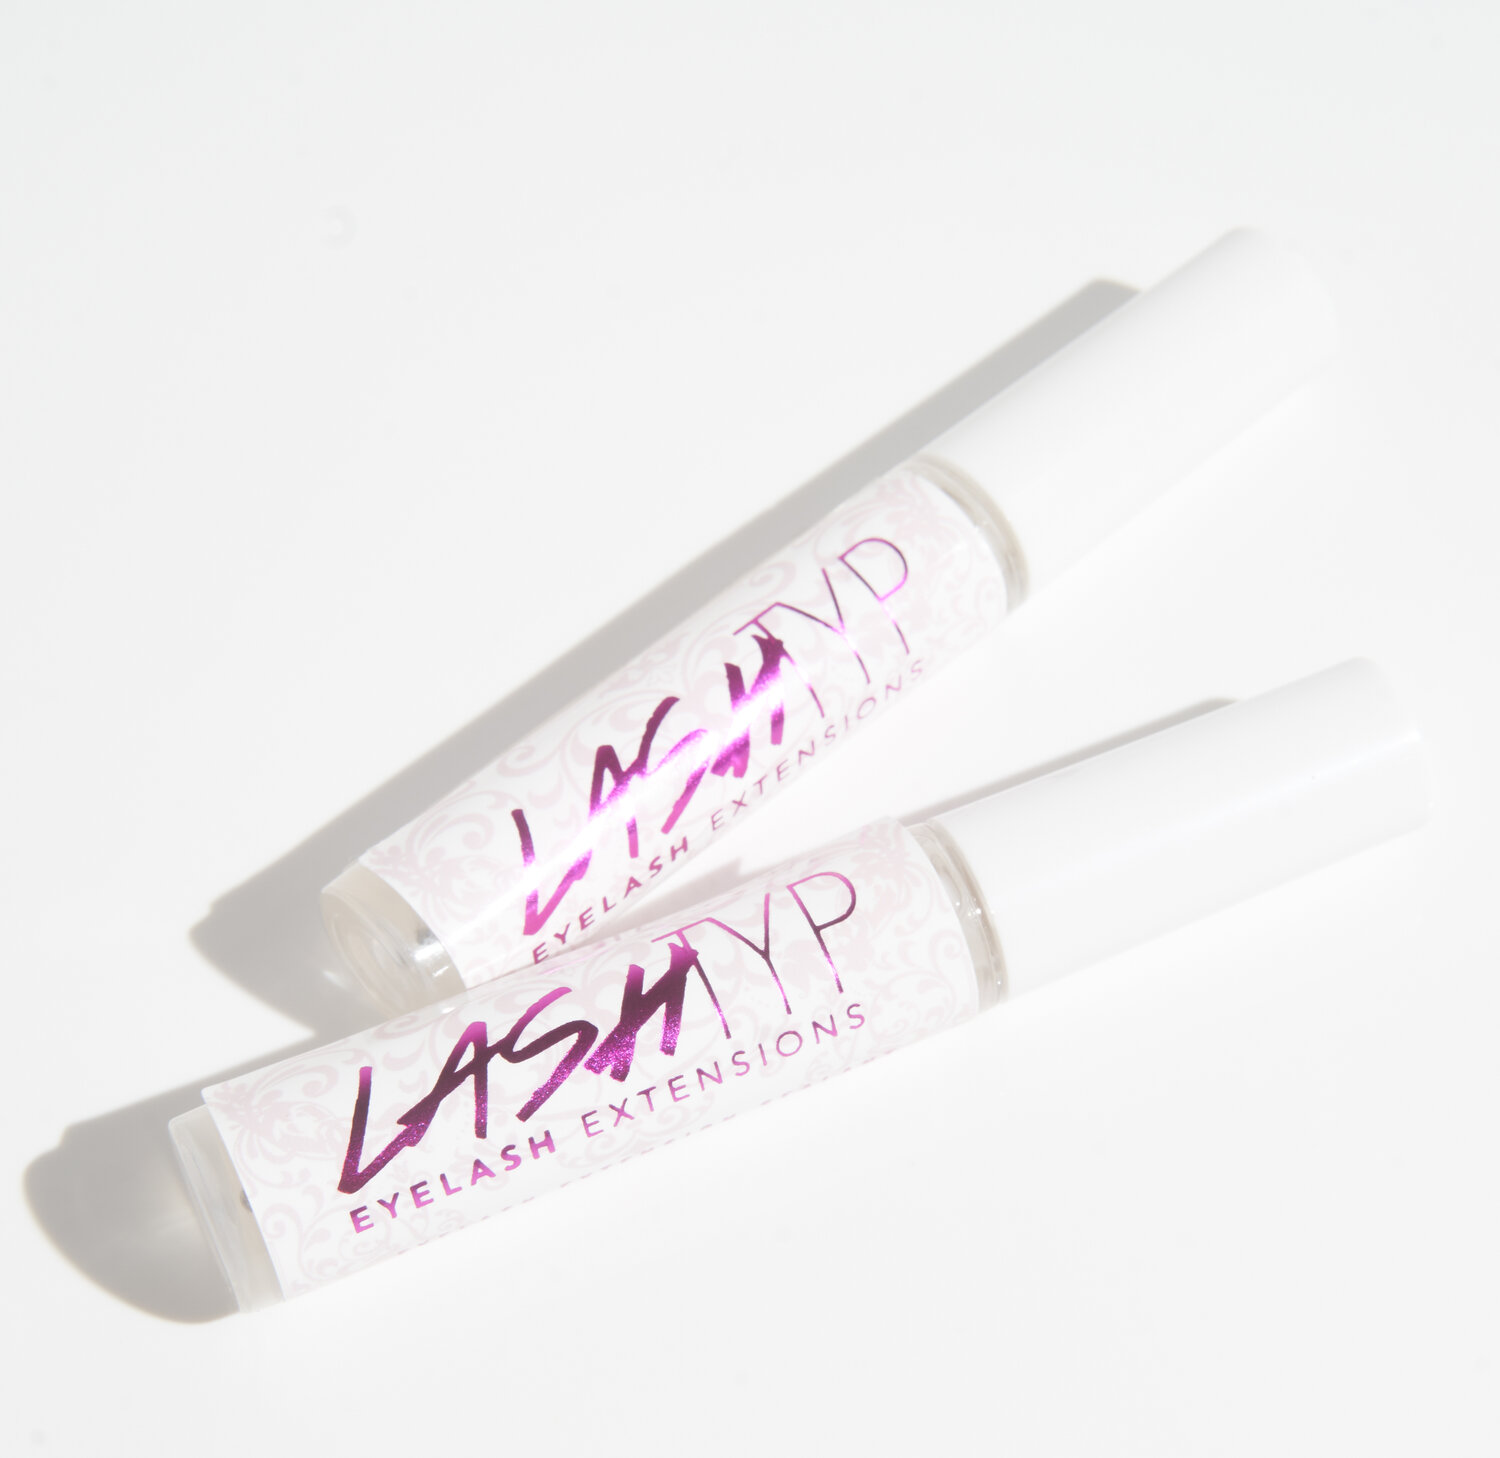 LashTyp | — Eyelash Extensions Shop